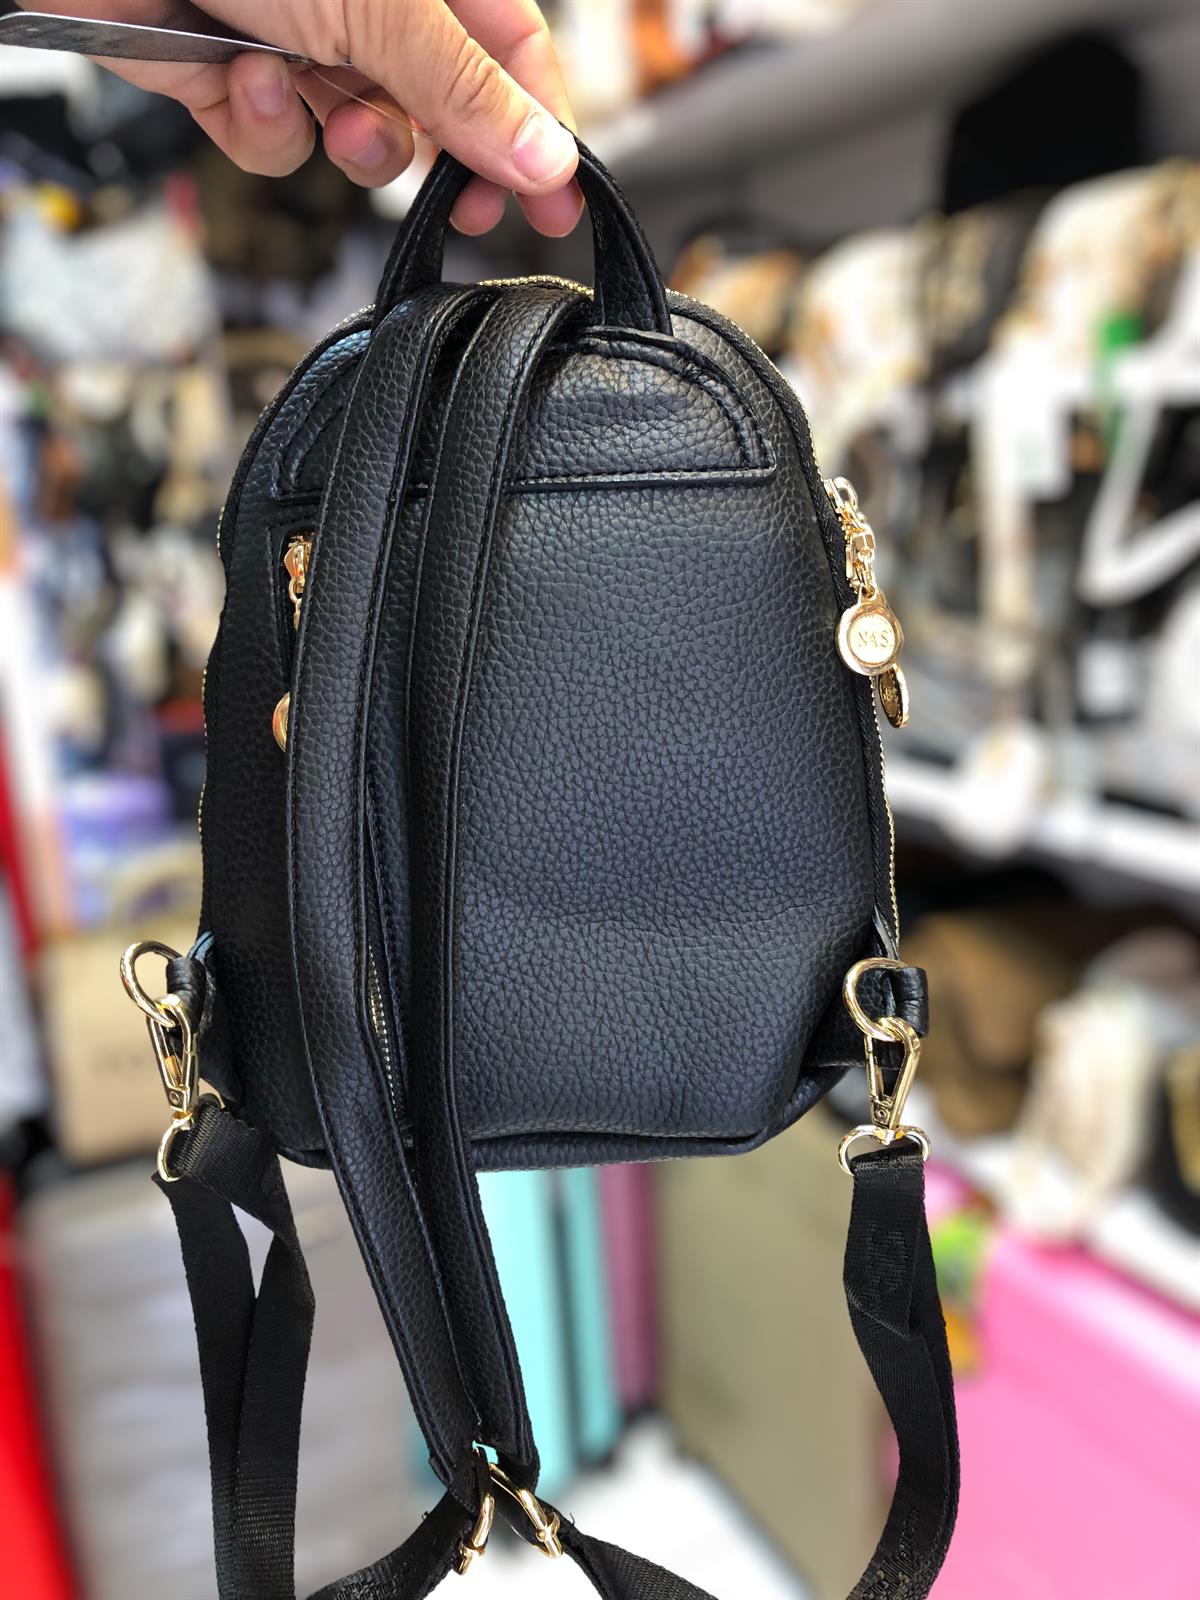 Nasbags siyah küçük sırt çantası 1204 ebat 21 cm 17 |elizabell.com.tr